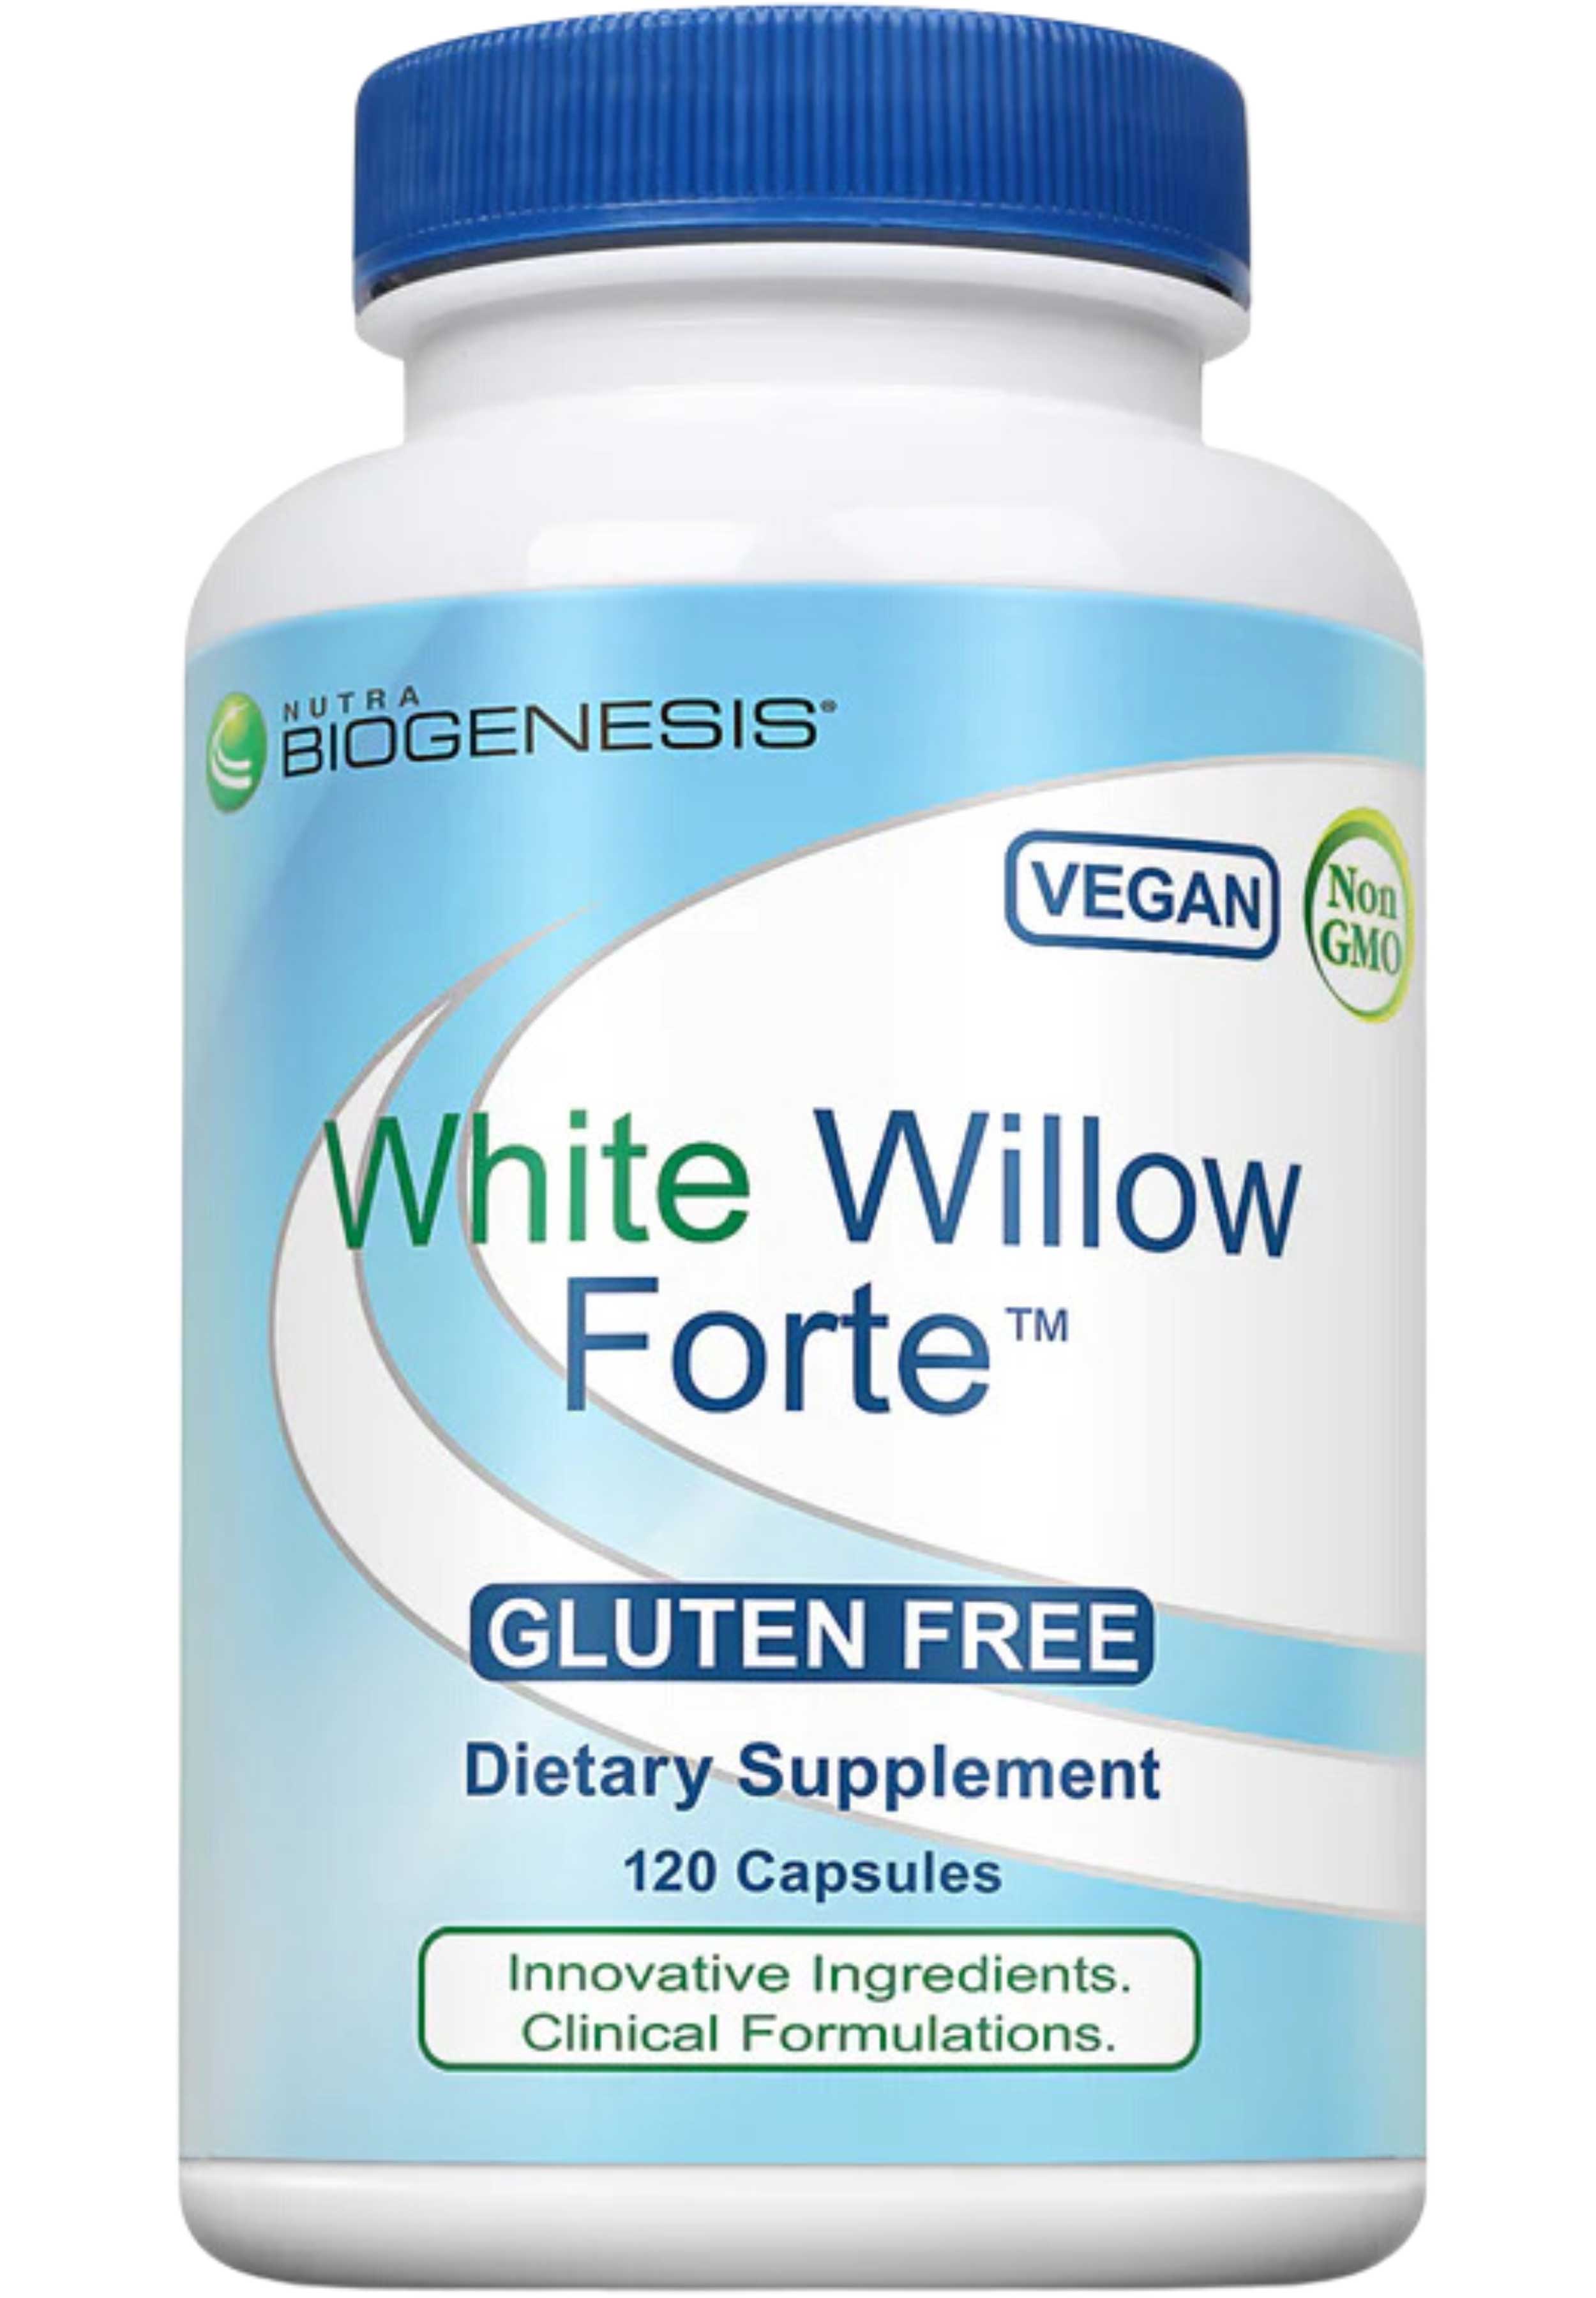 Nutra BioGenesis White Willow Forte